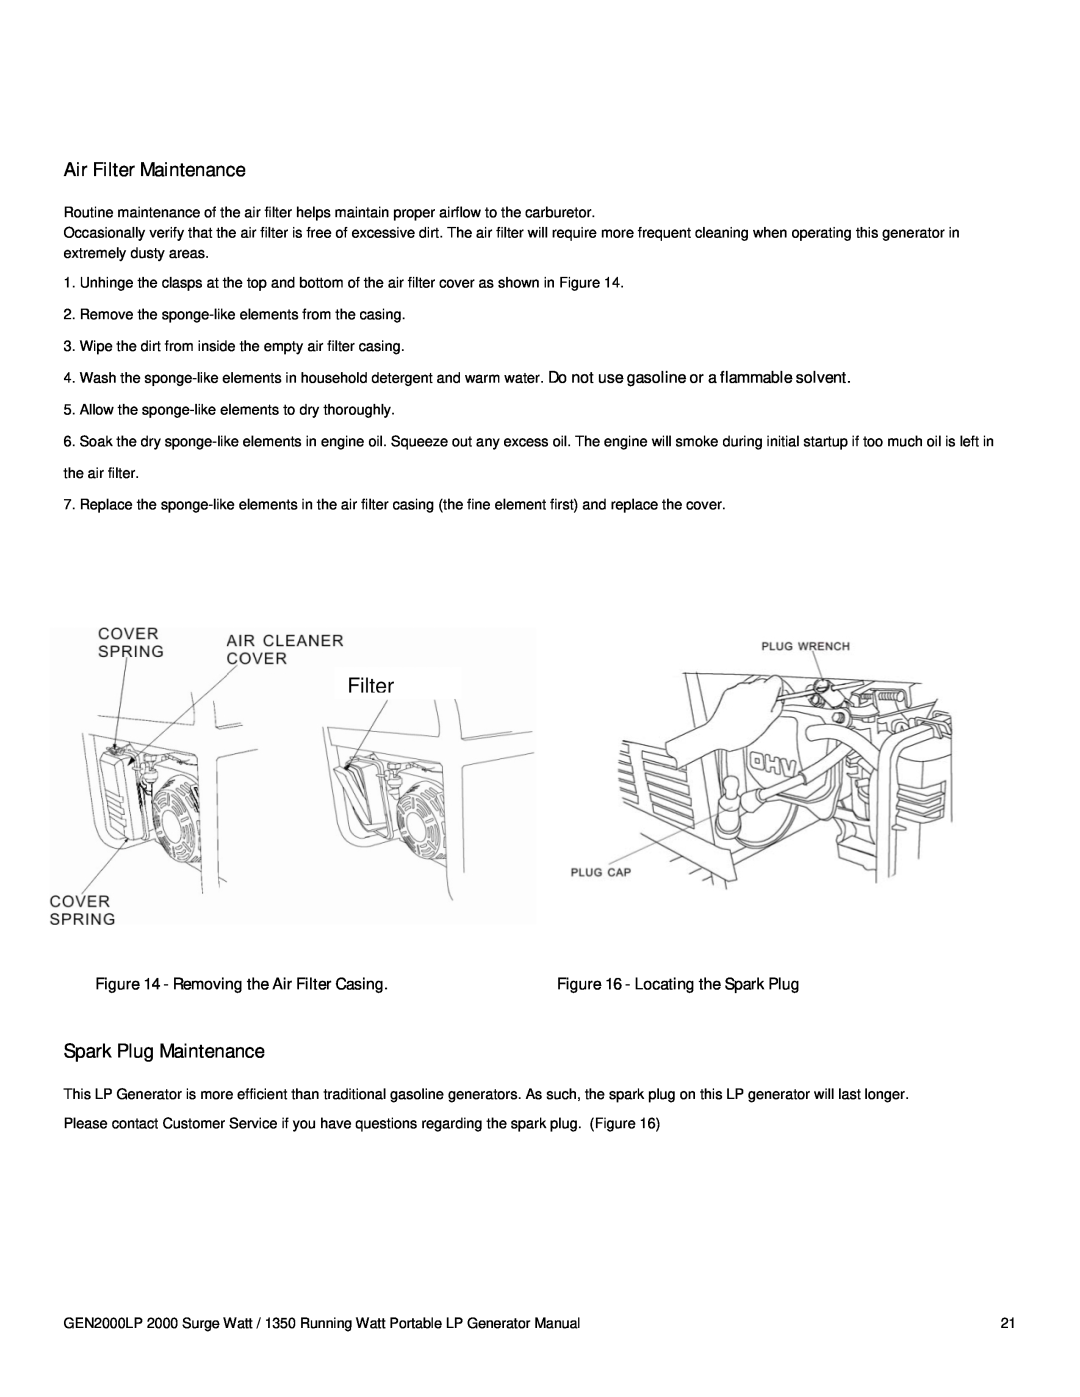 Buffalo Tools GEN2000LP instruction manual Air Filter Maintenance, Spark Plug Maintenance 